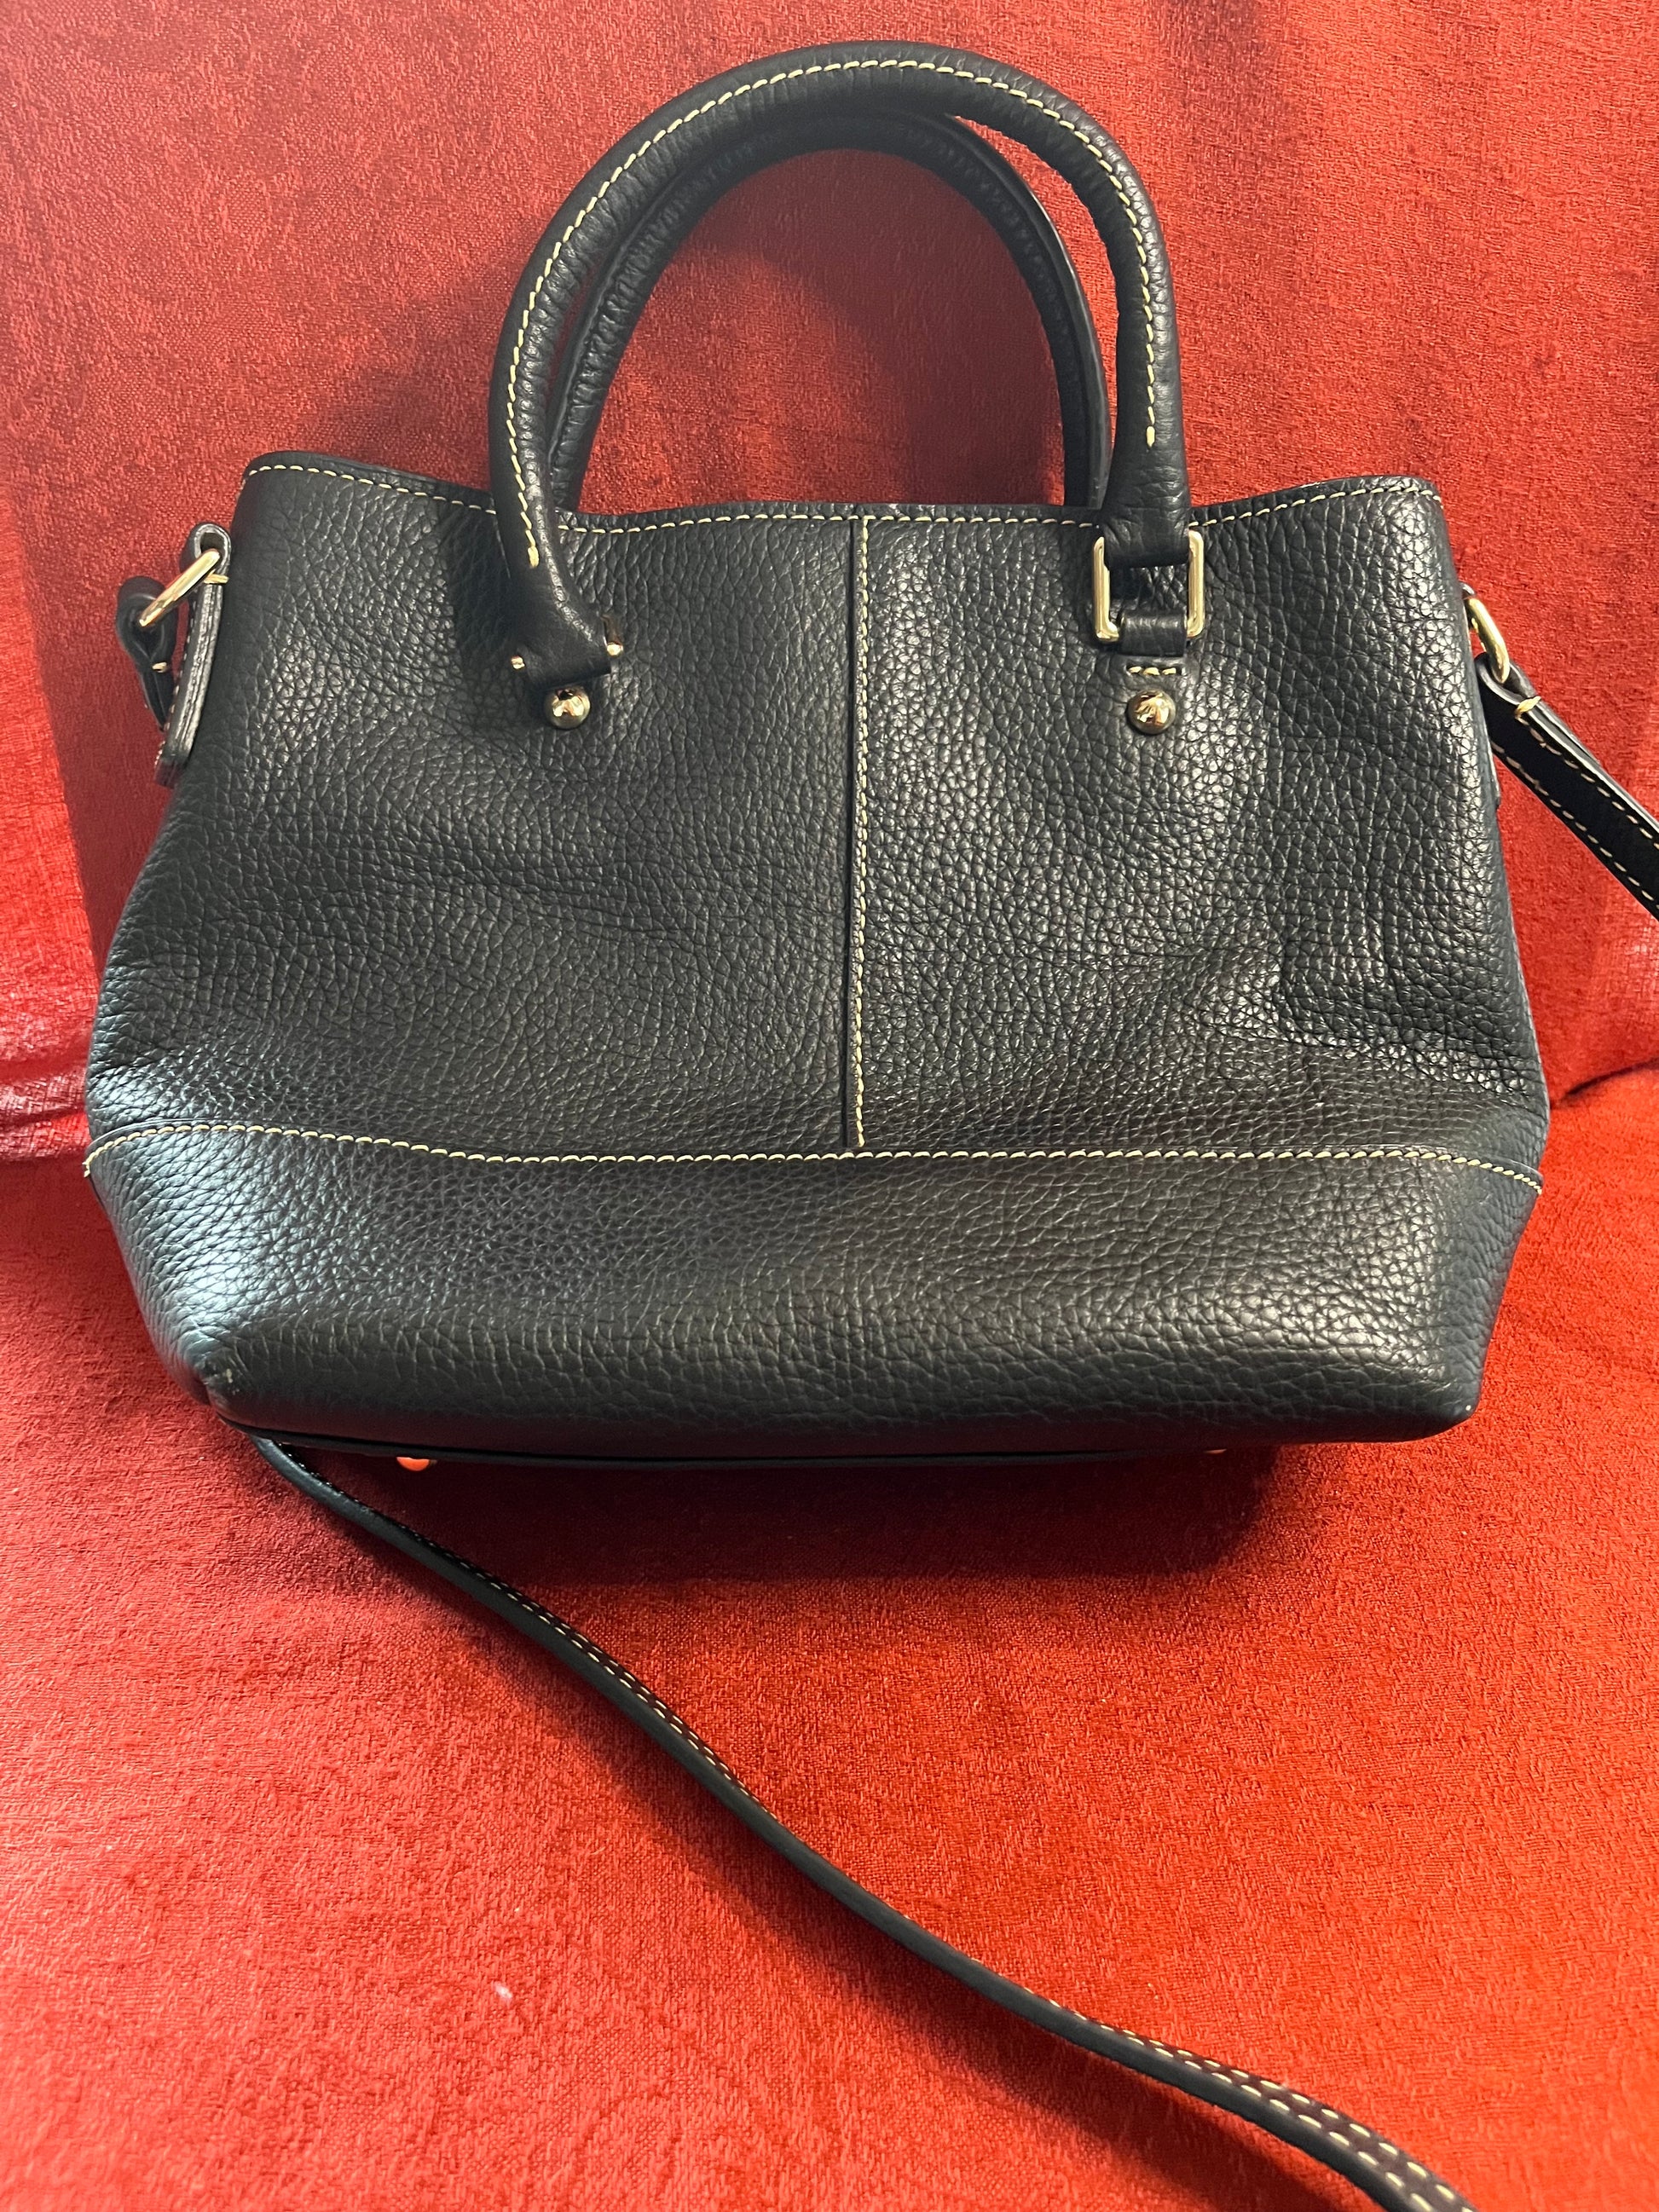 Dooney & Bourke Saffiano Leather Small Crossbody Bag